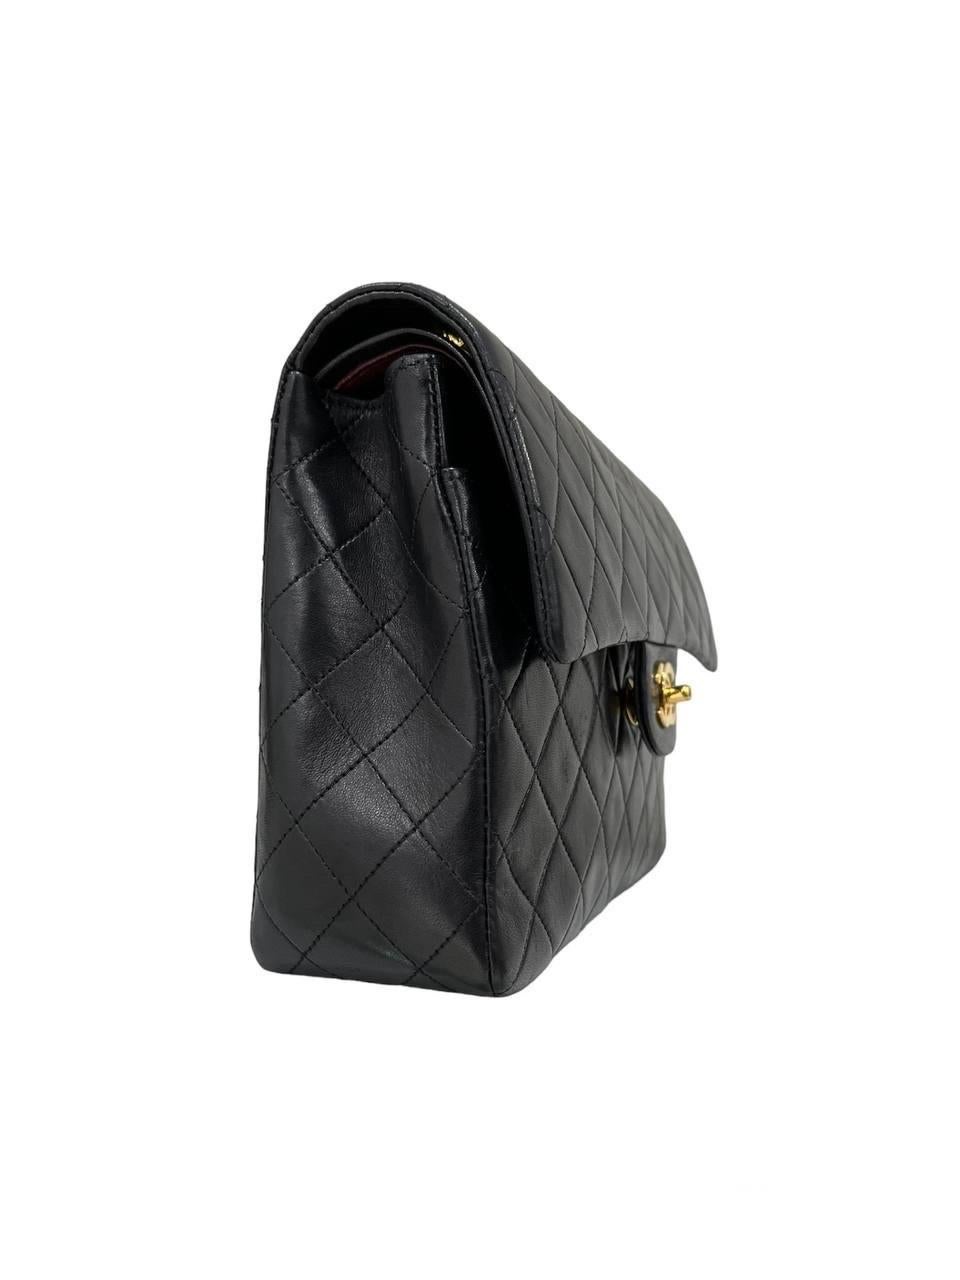 Noir  1989 Chanel Flap Black Leather Vintage Top Handle Bag